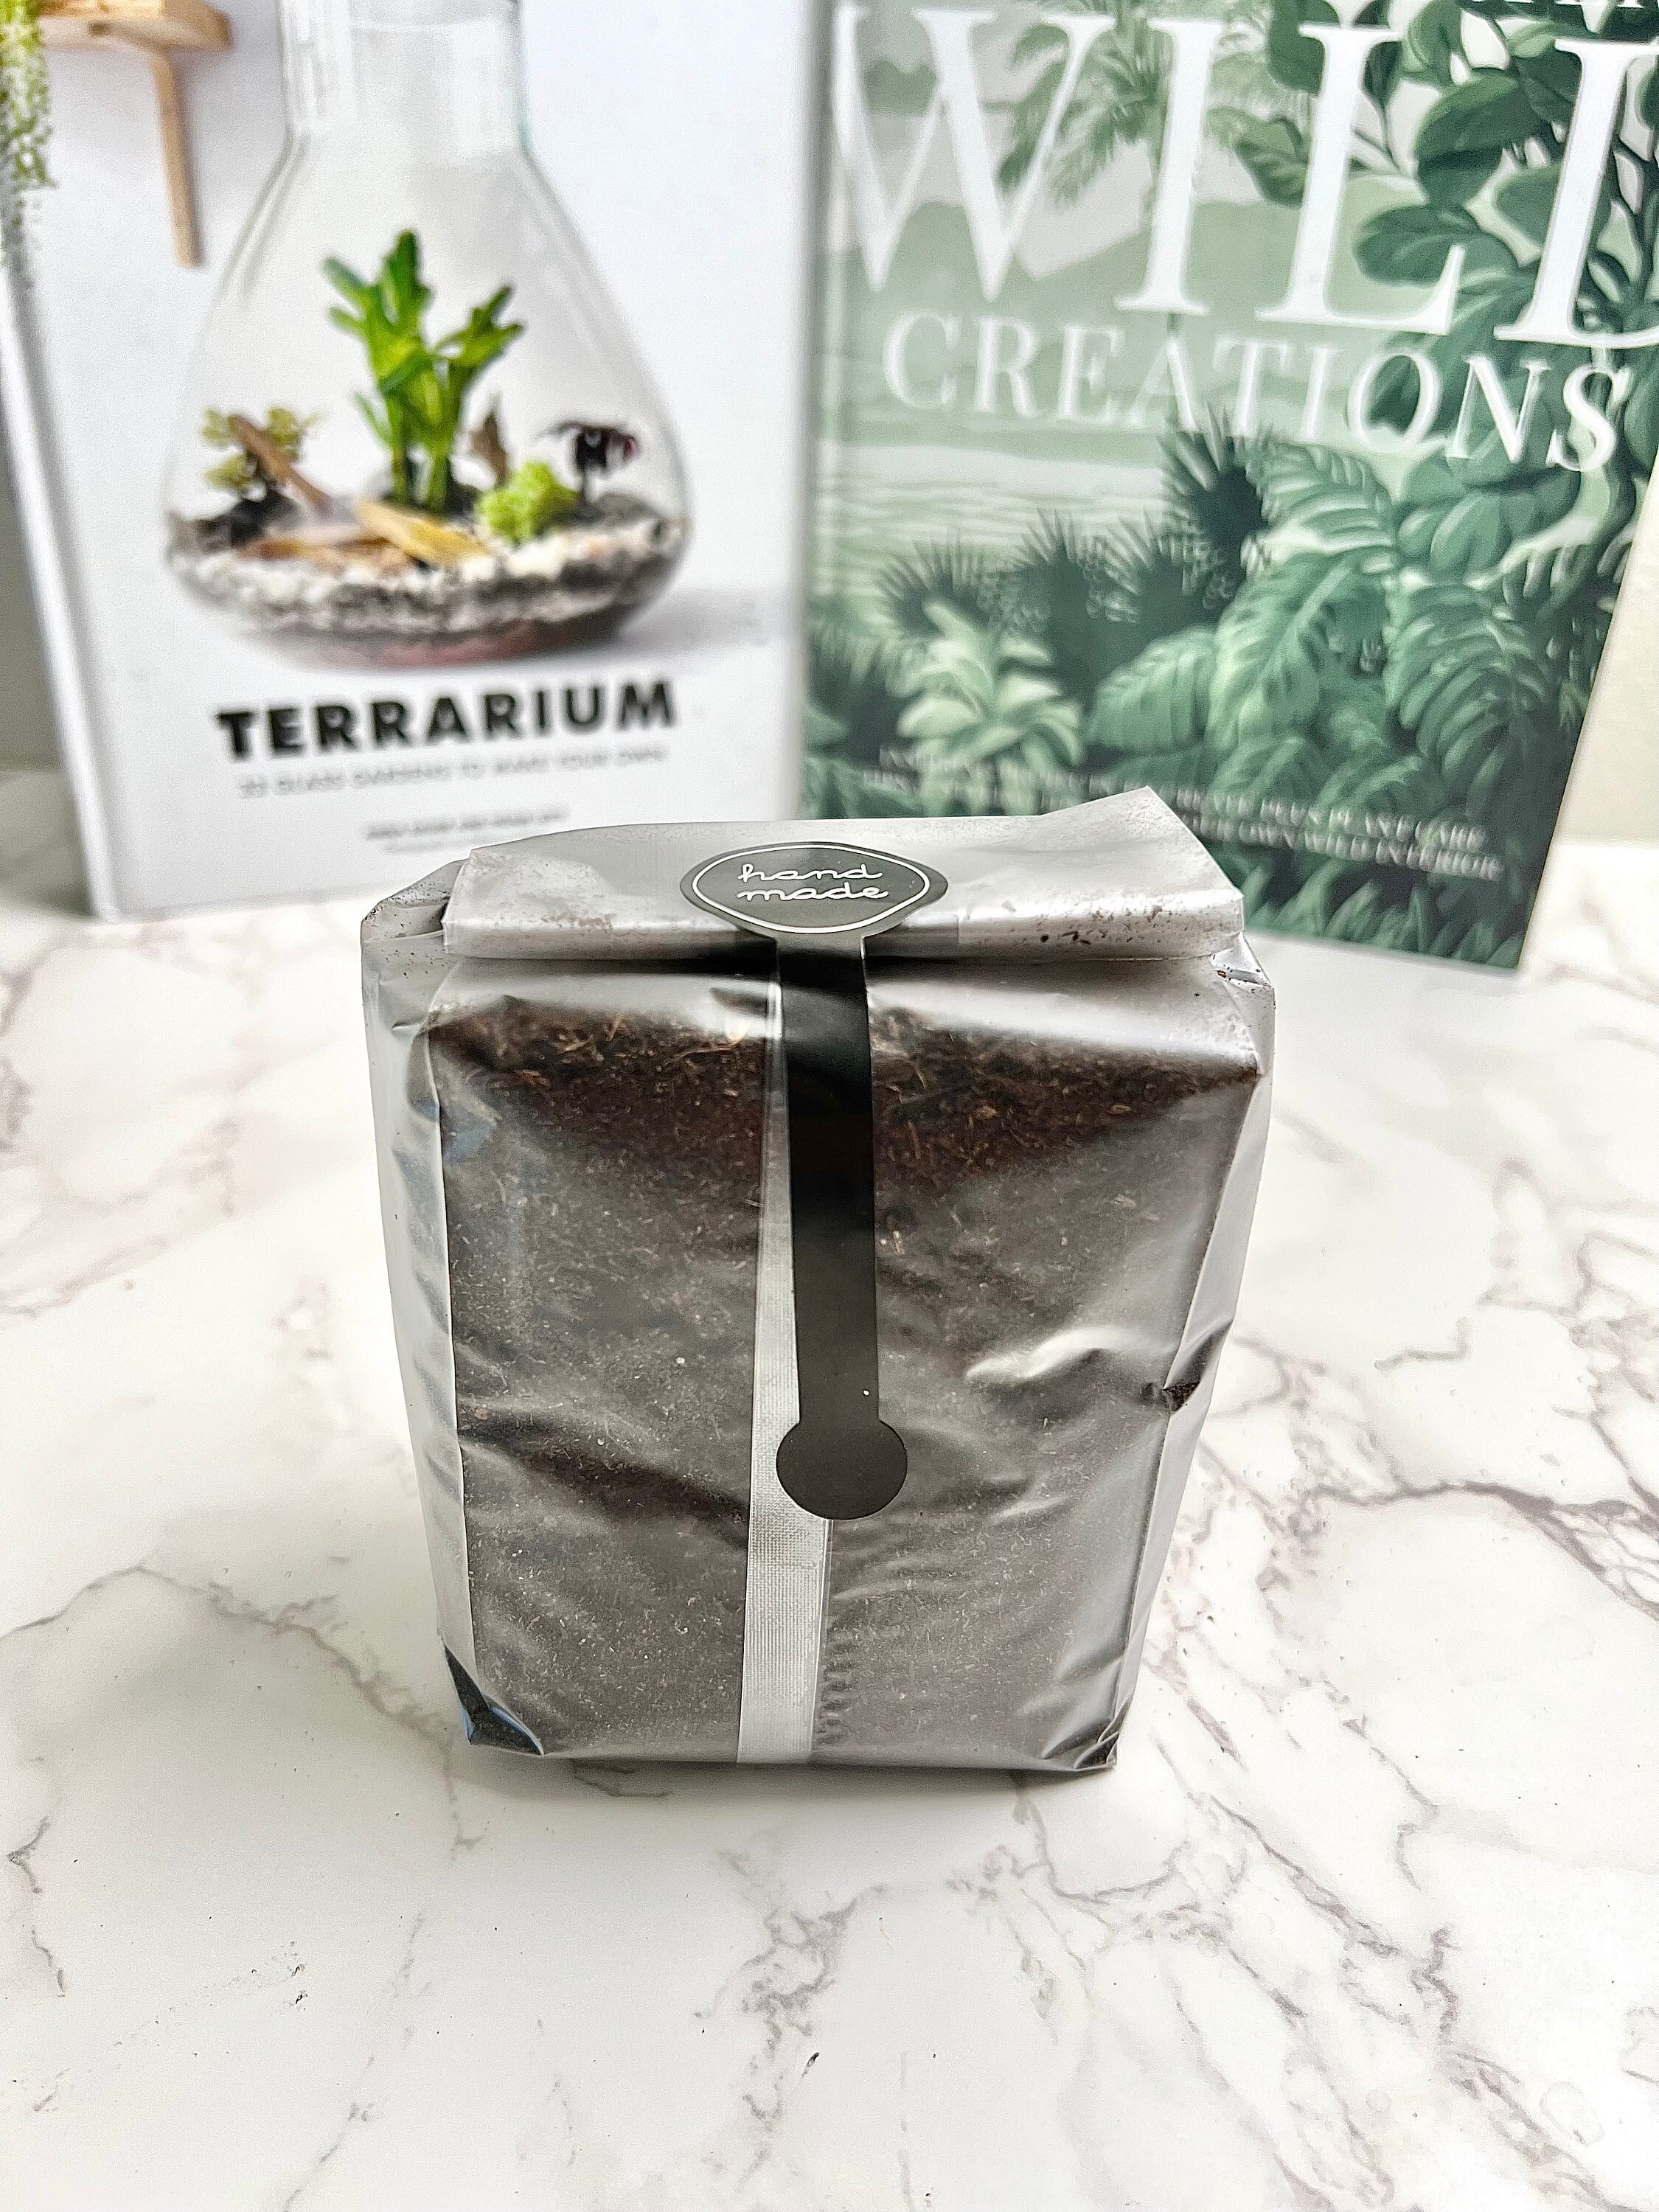 Sphagnum Peat Moss (Organic) 1 Gallon